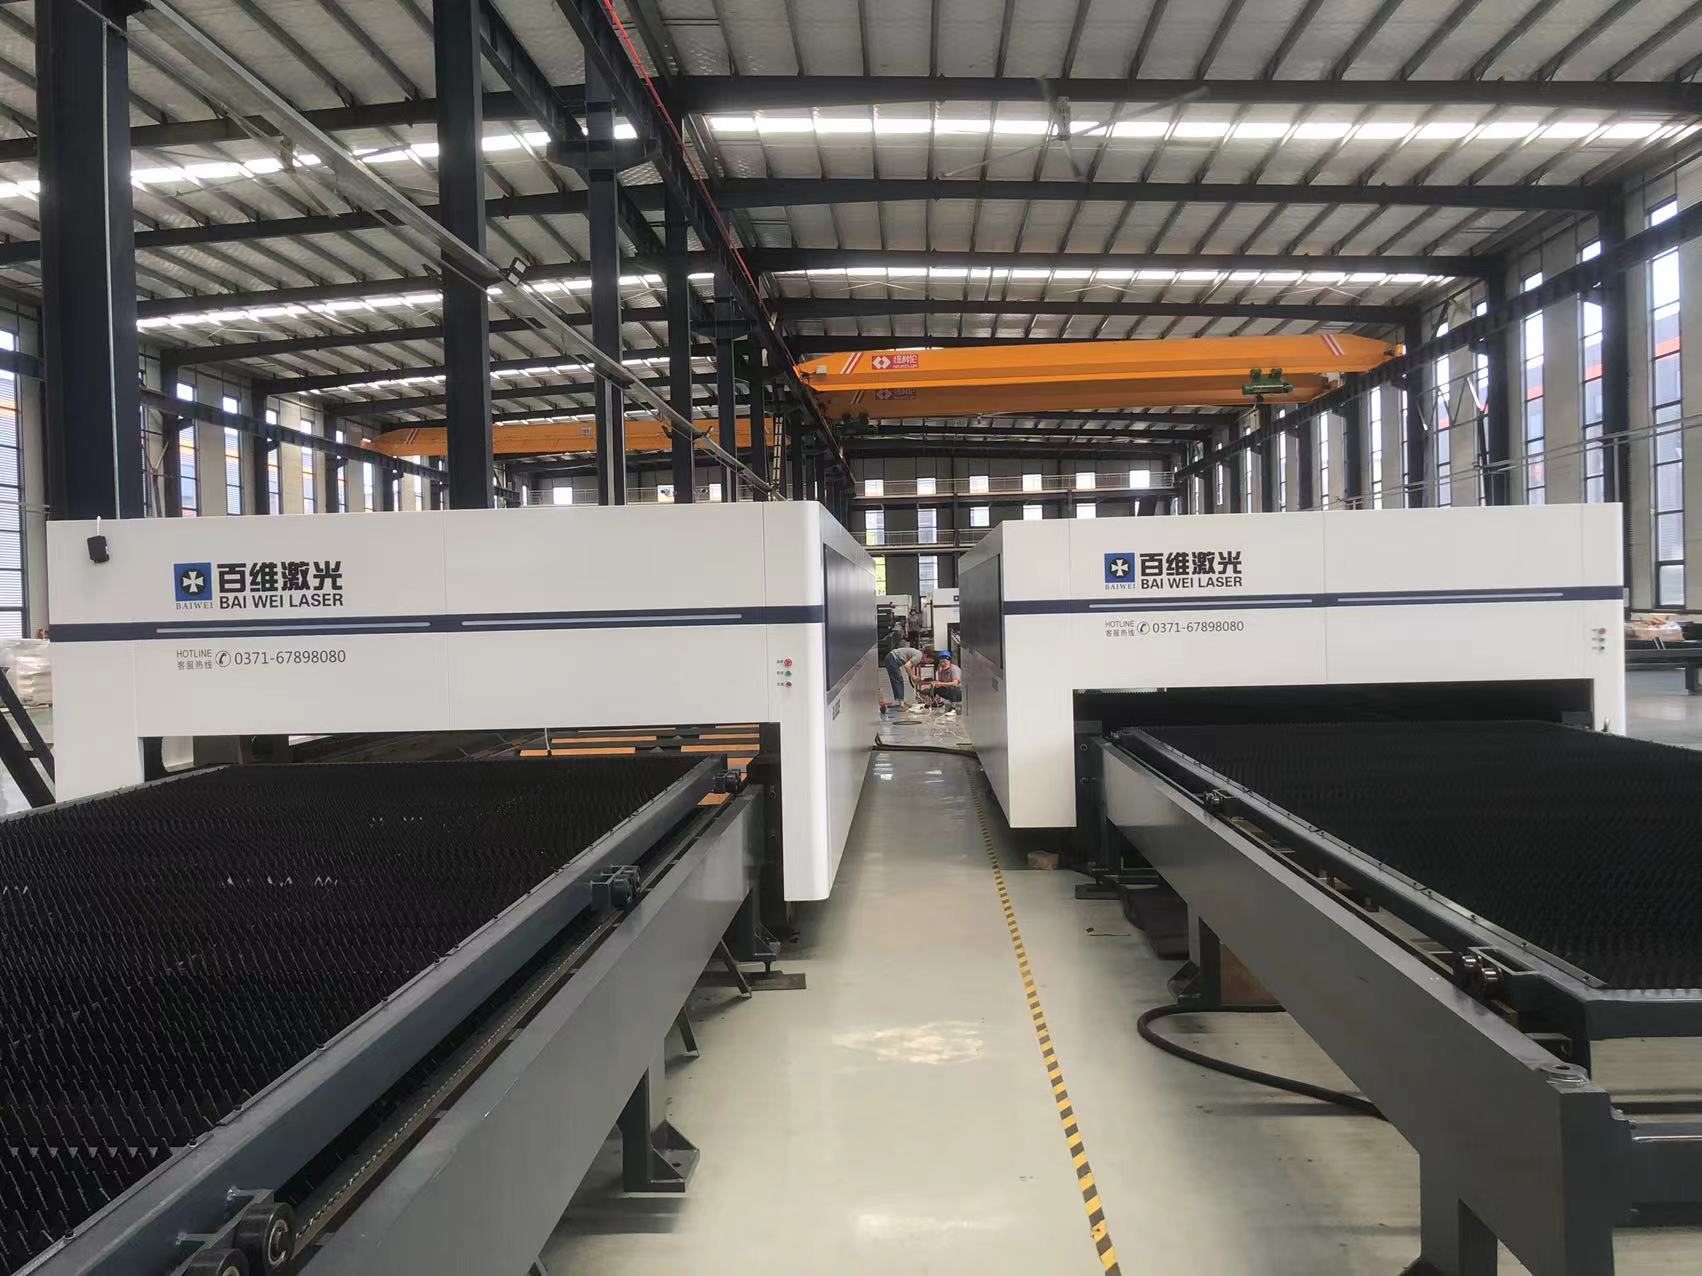 High-power laser cutting machine cutting machine large-scale 20000w Baiwei laser cutting machine can be customized